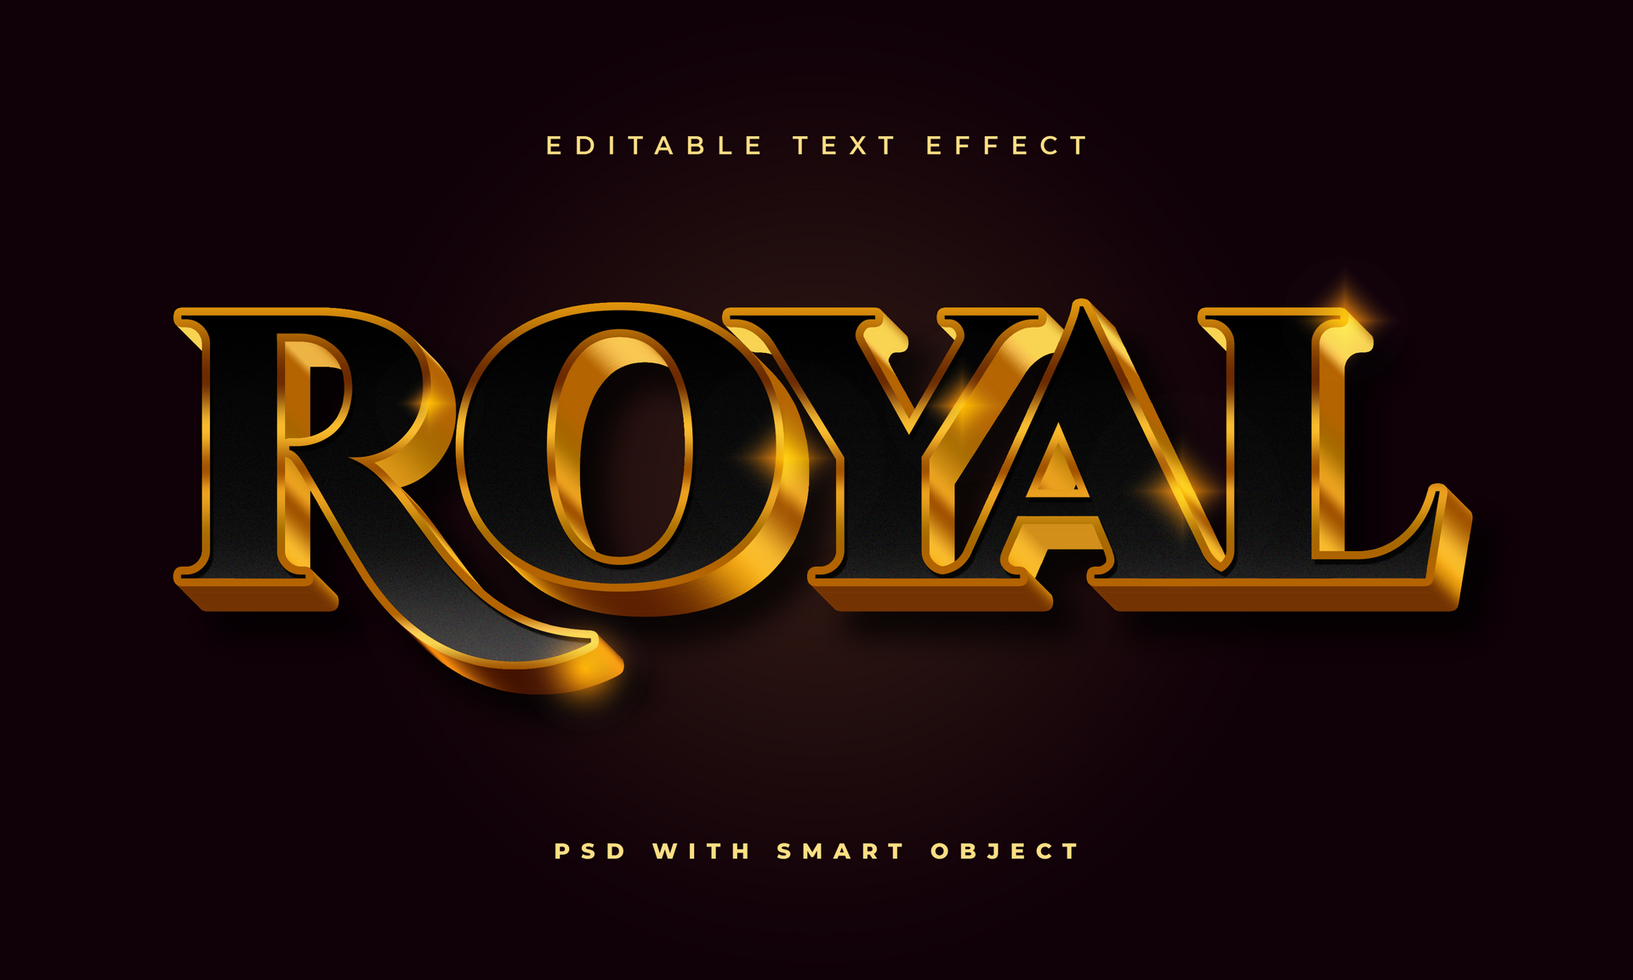 Gold Royal text effect psd